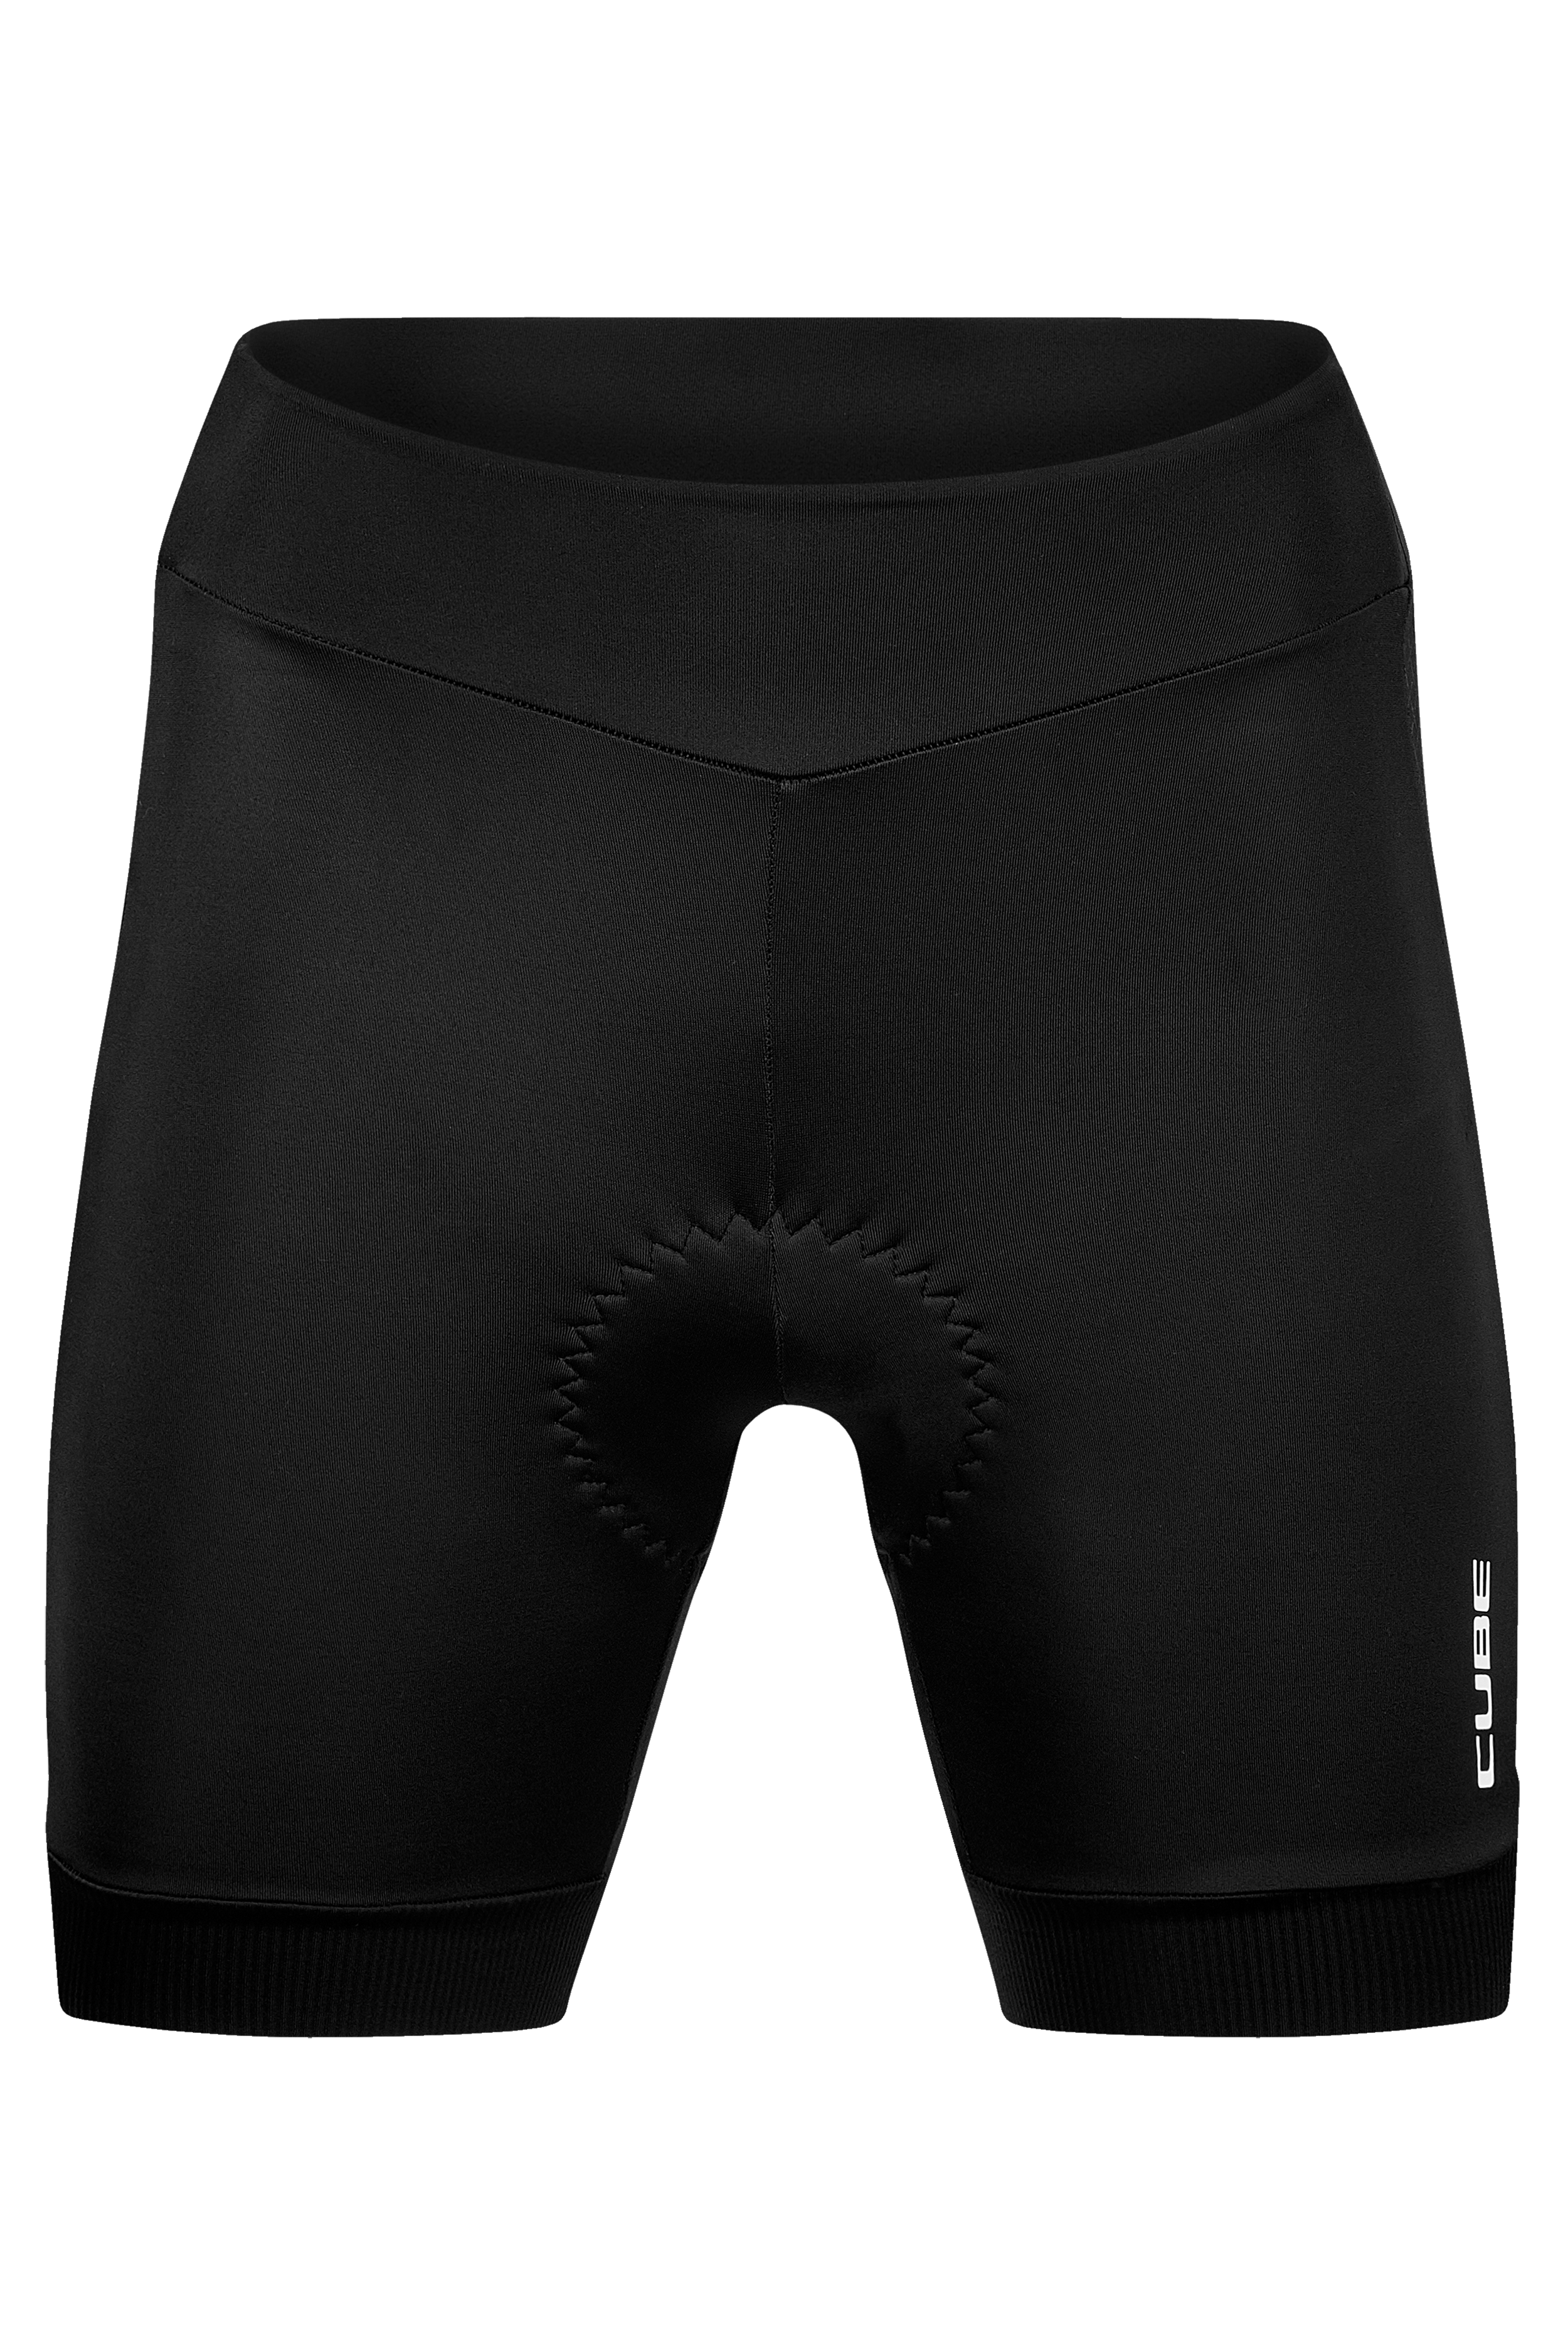 CUBE BLACKLINE WS Cycle Shorts